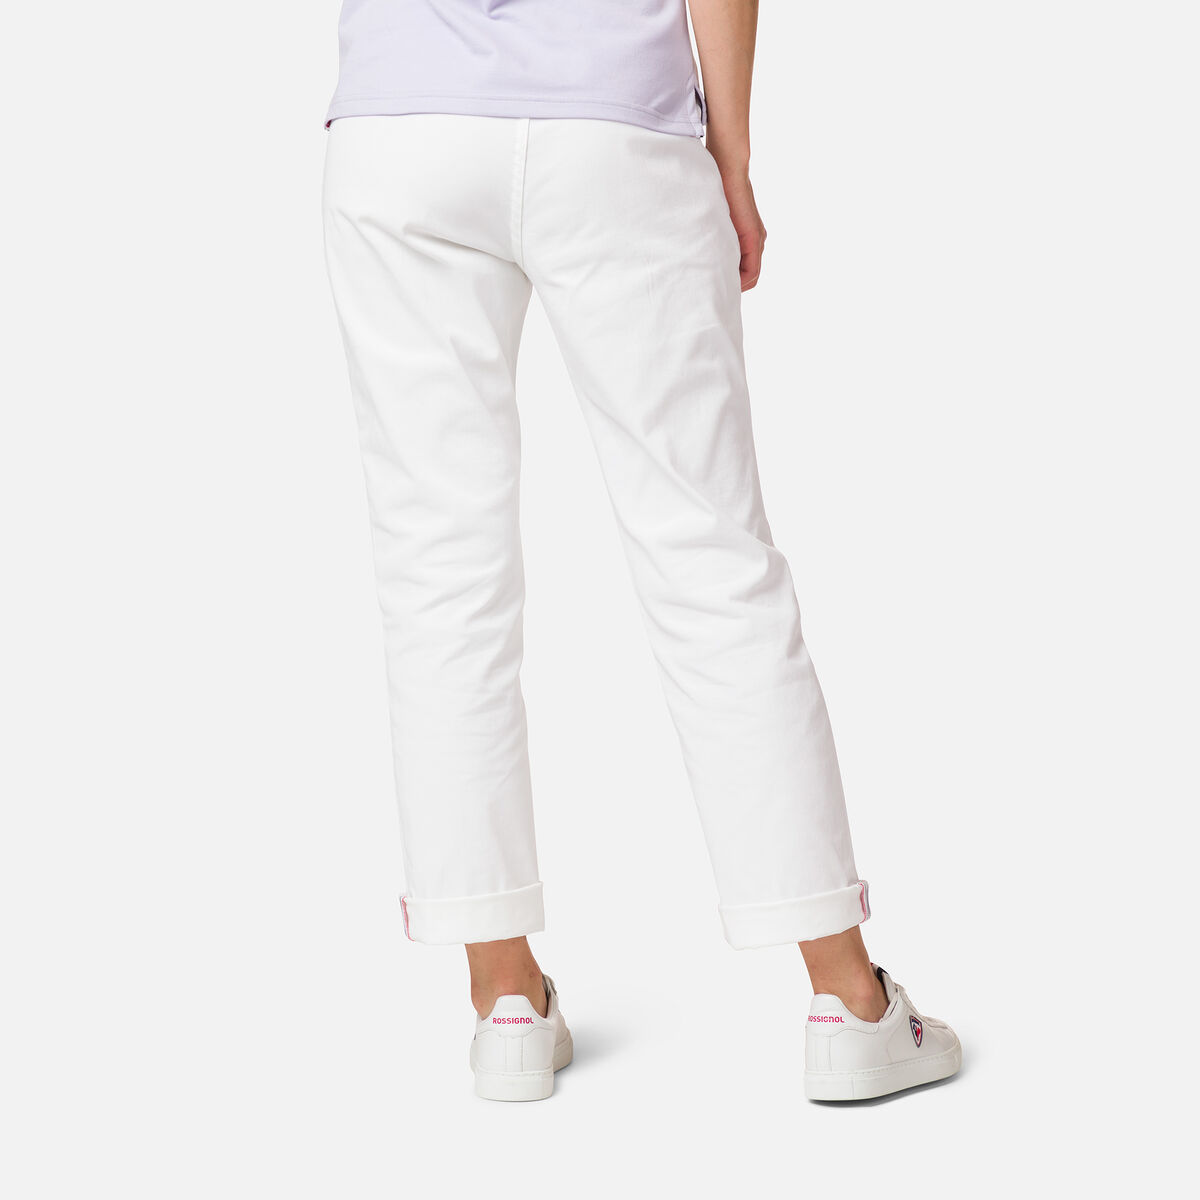 Women's organic cotton chino pants